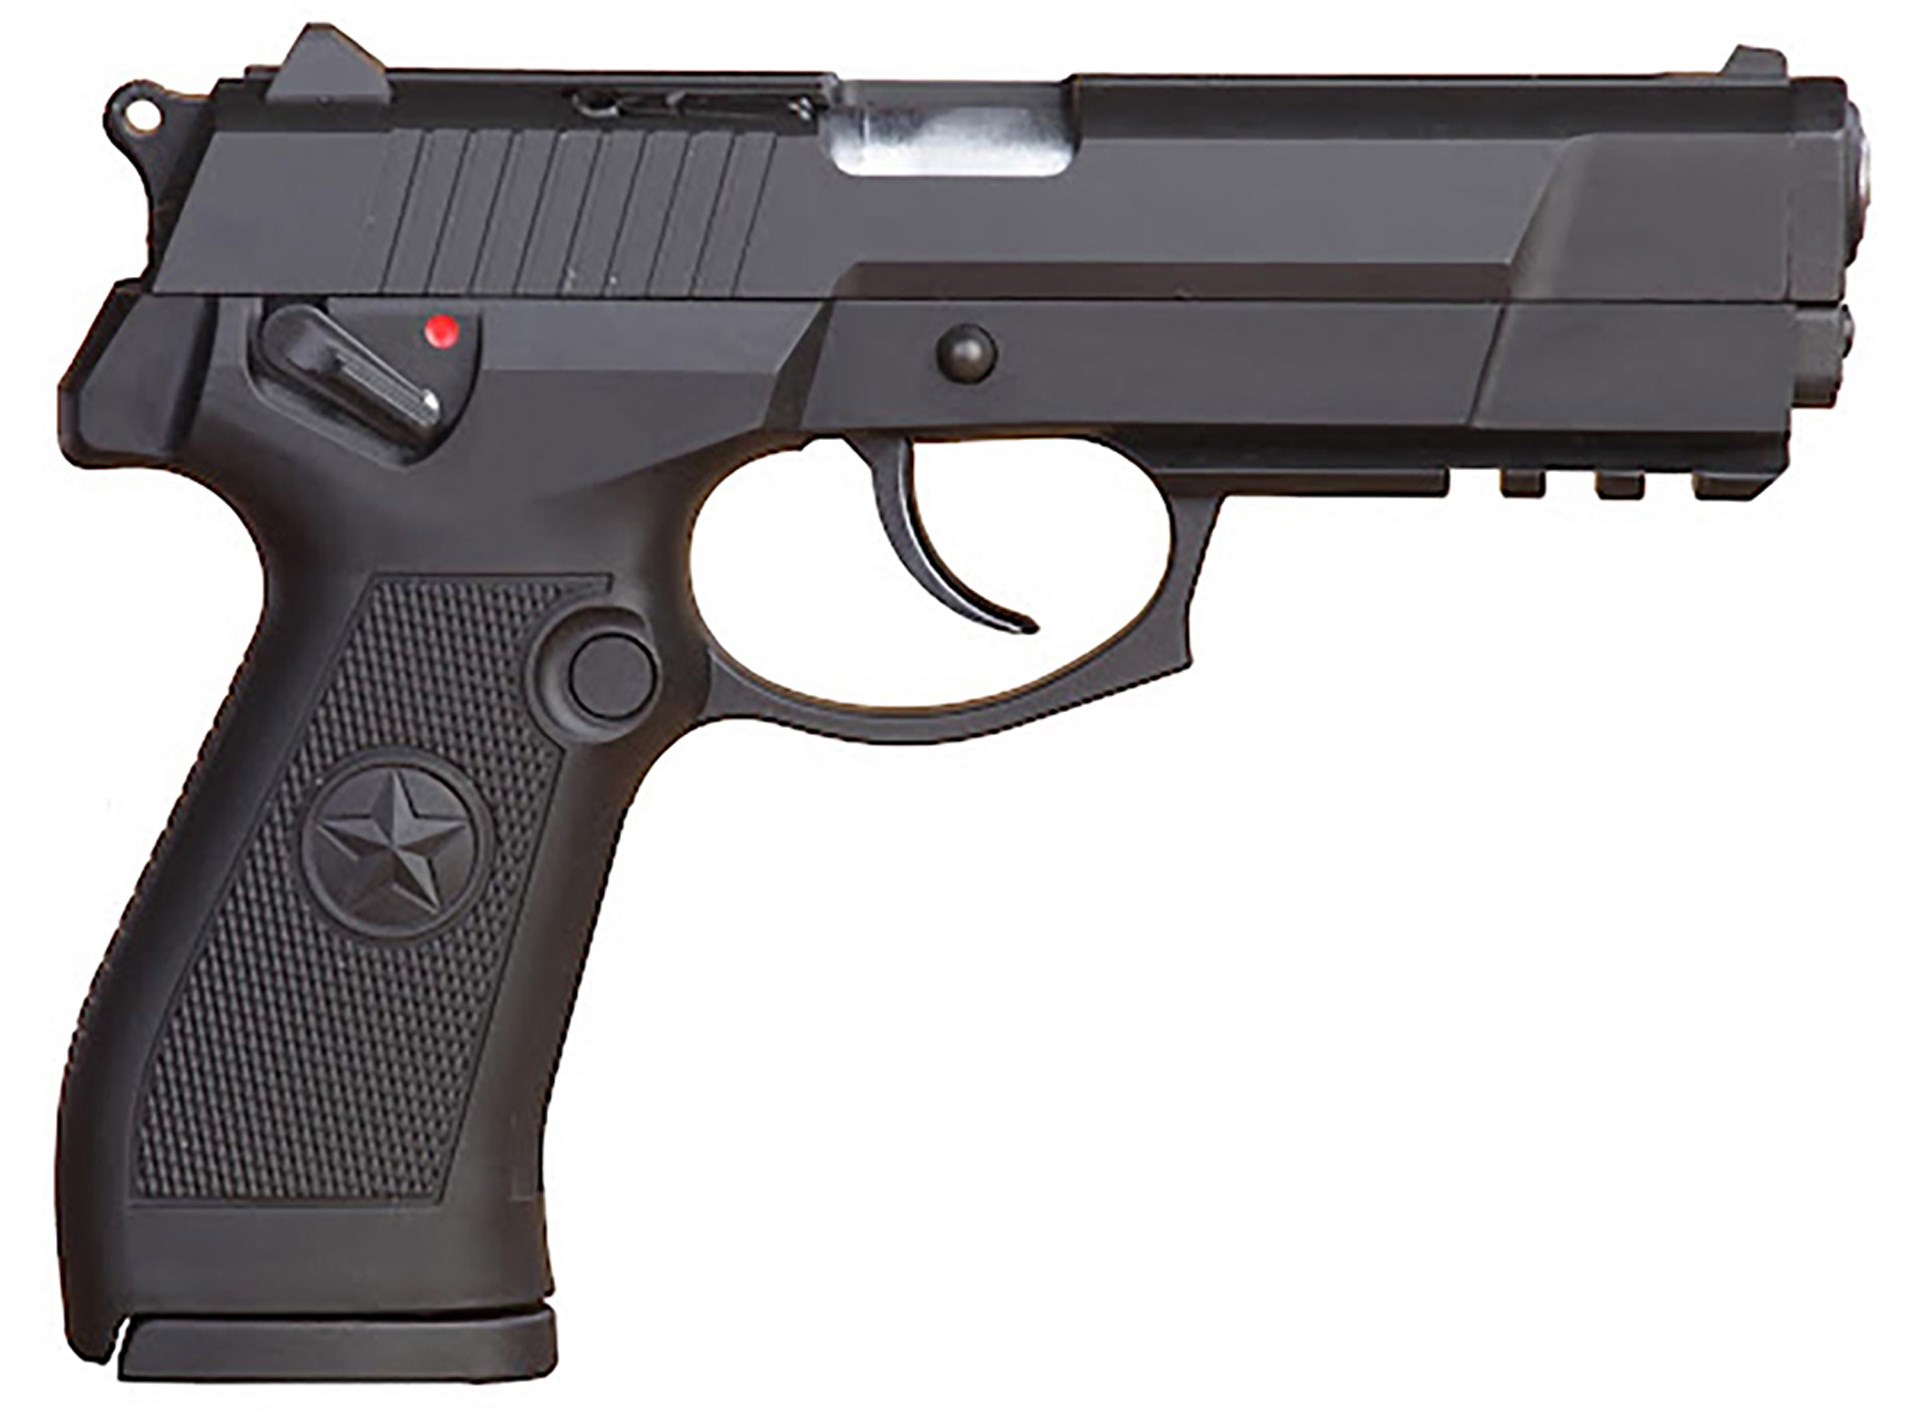 Norinco CF-98 9mm pistol right-side view black handgun on white background